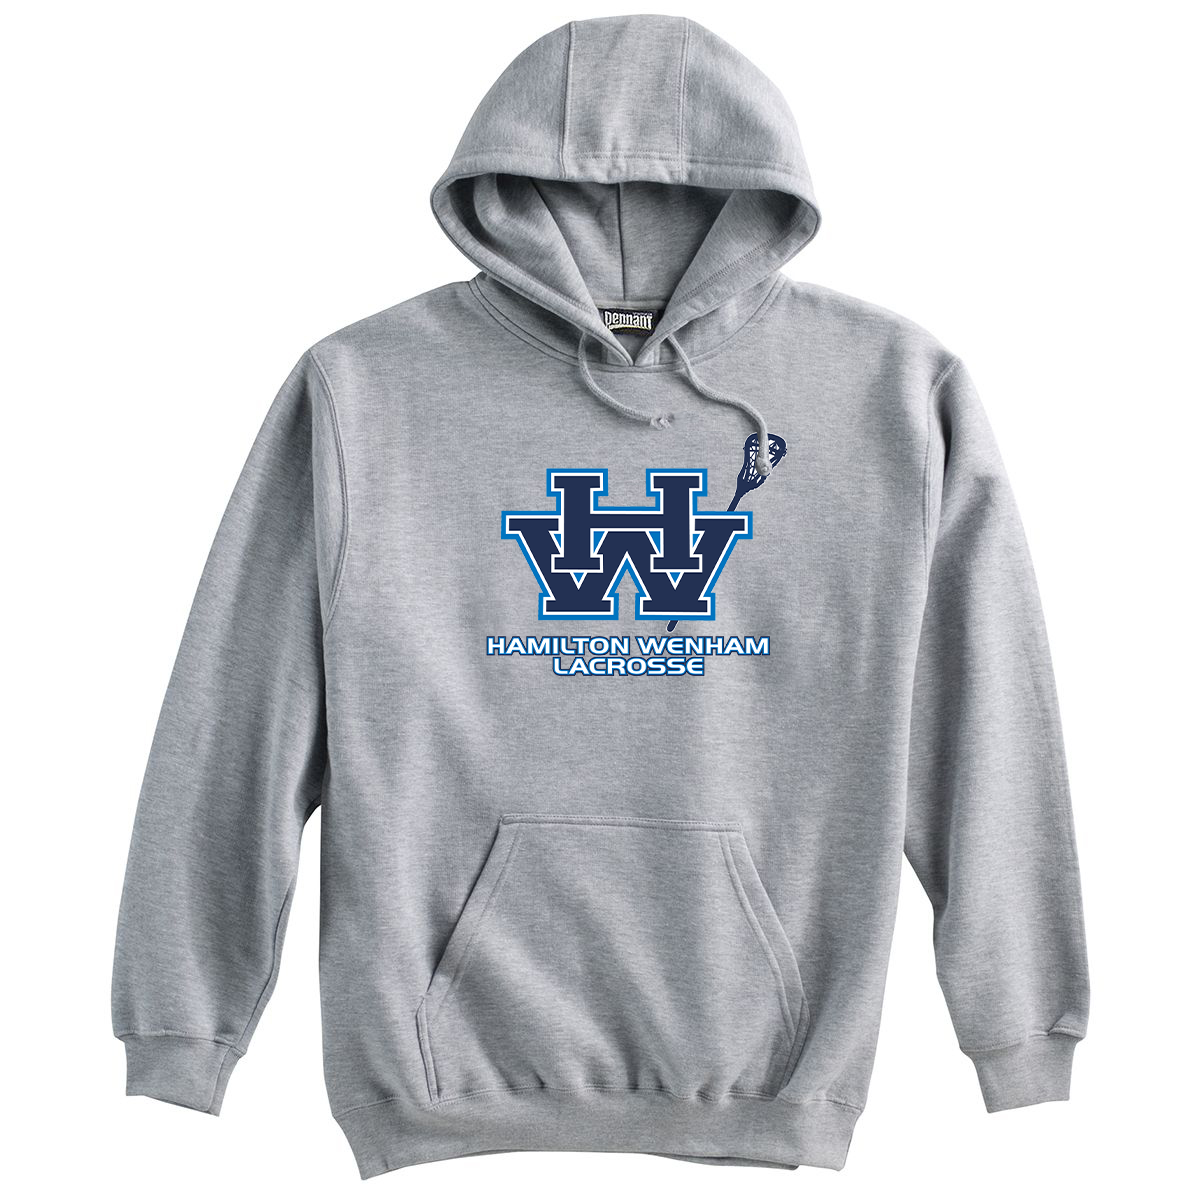 Hamilton Wenham Lacrosse Sweatshirt-Grey